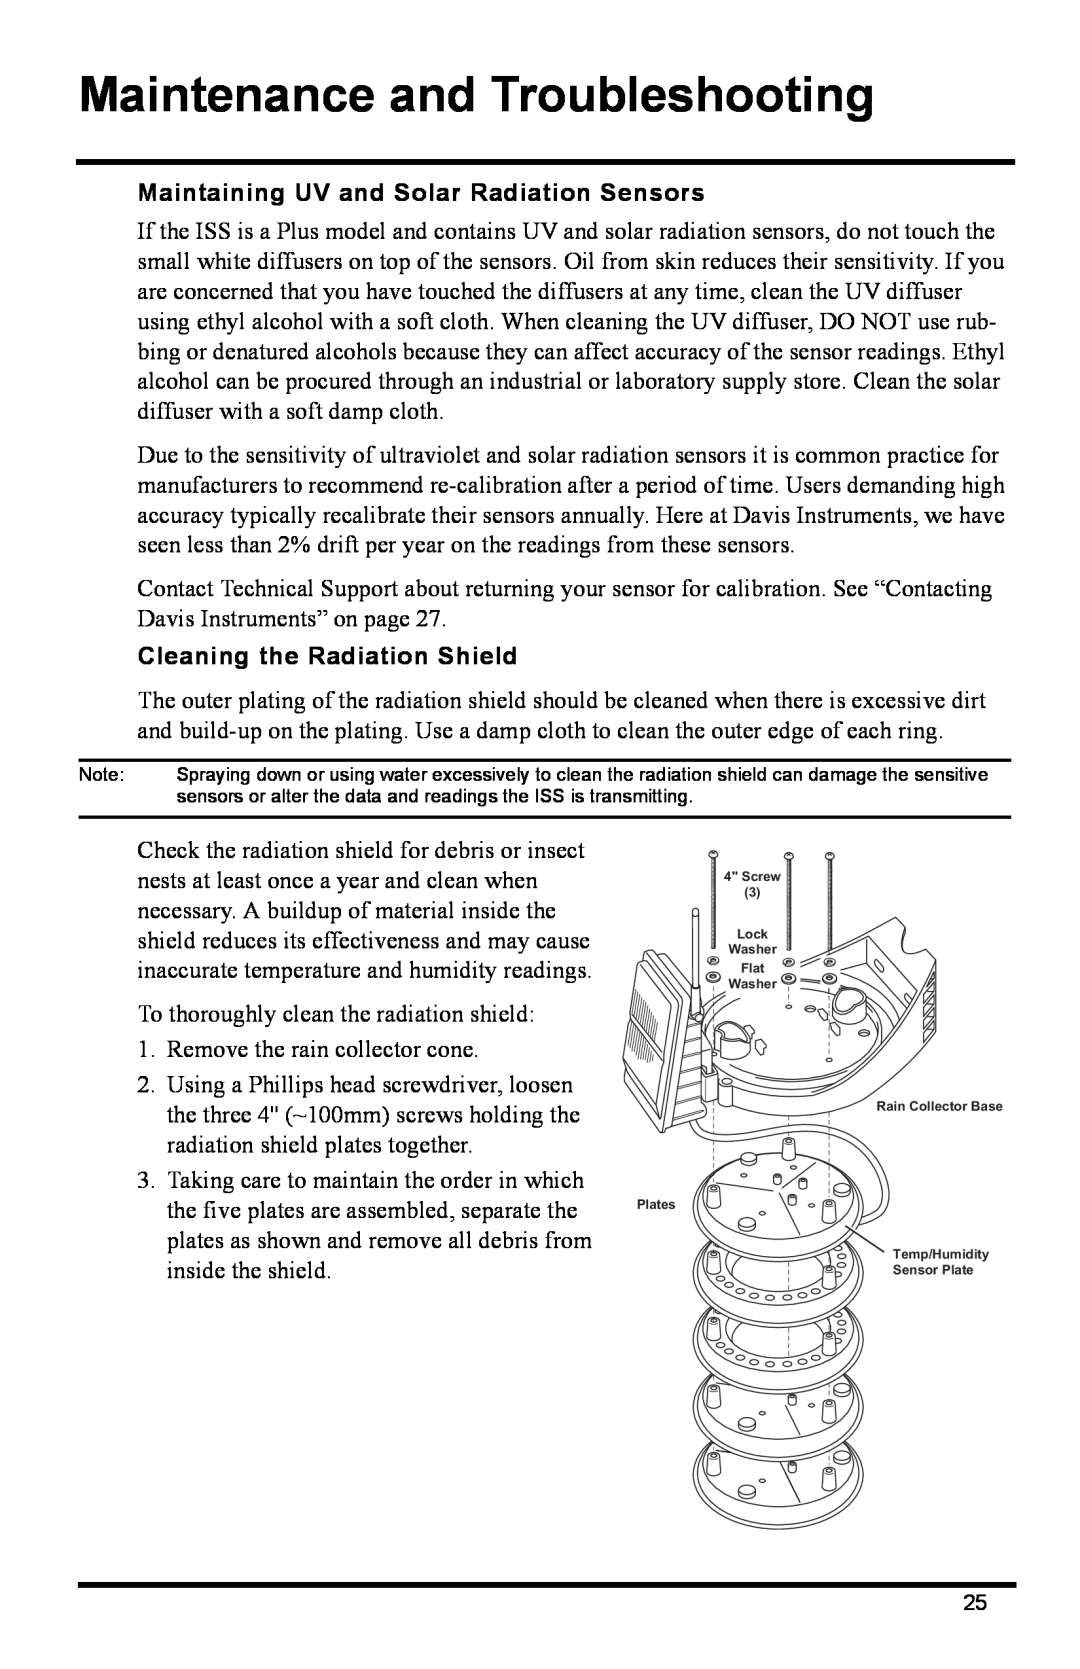 DAVIS 6322C installation manual Screw 3 Lock Washer Flat Washer, Rain Collector Base, Maintenance and Troubleshooting 